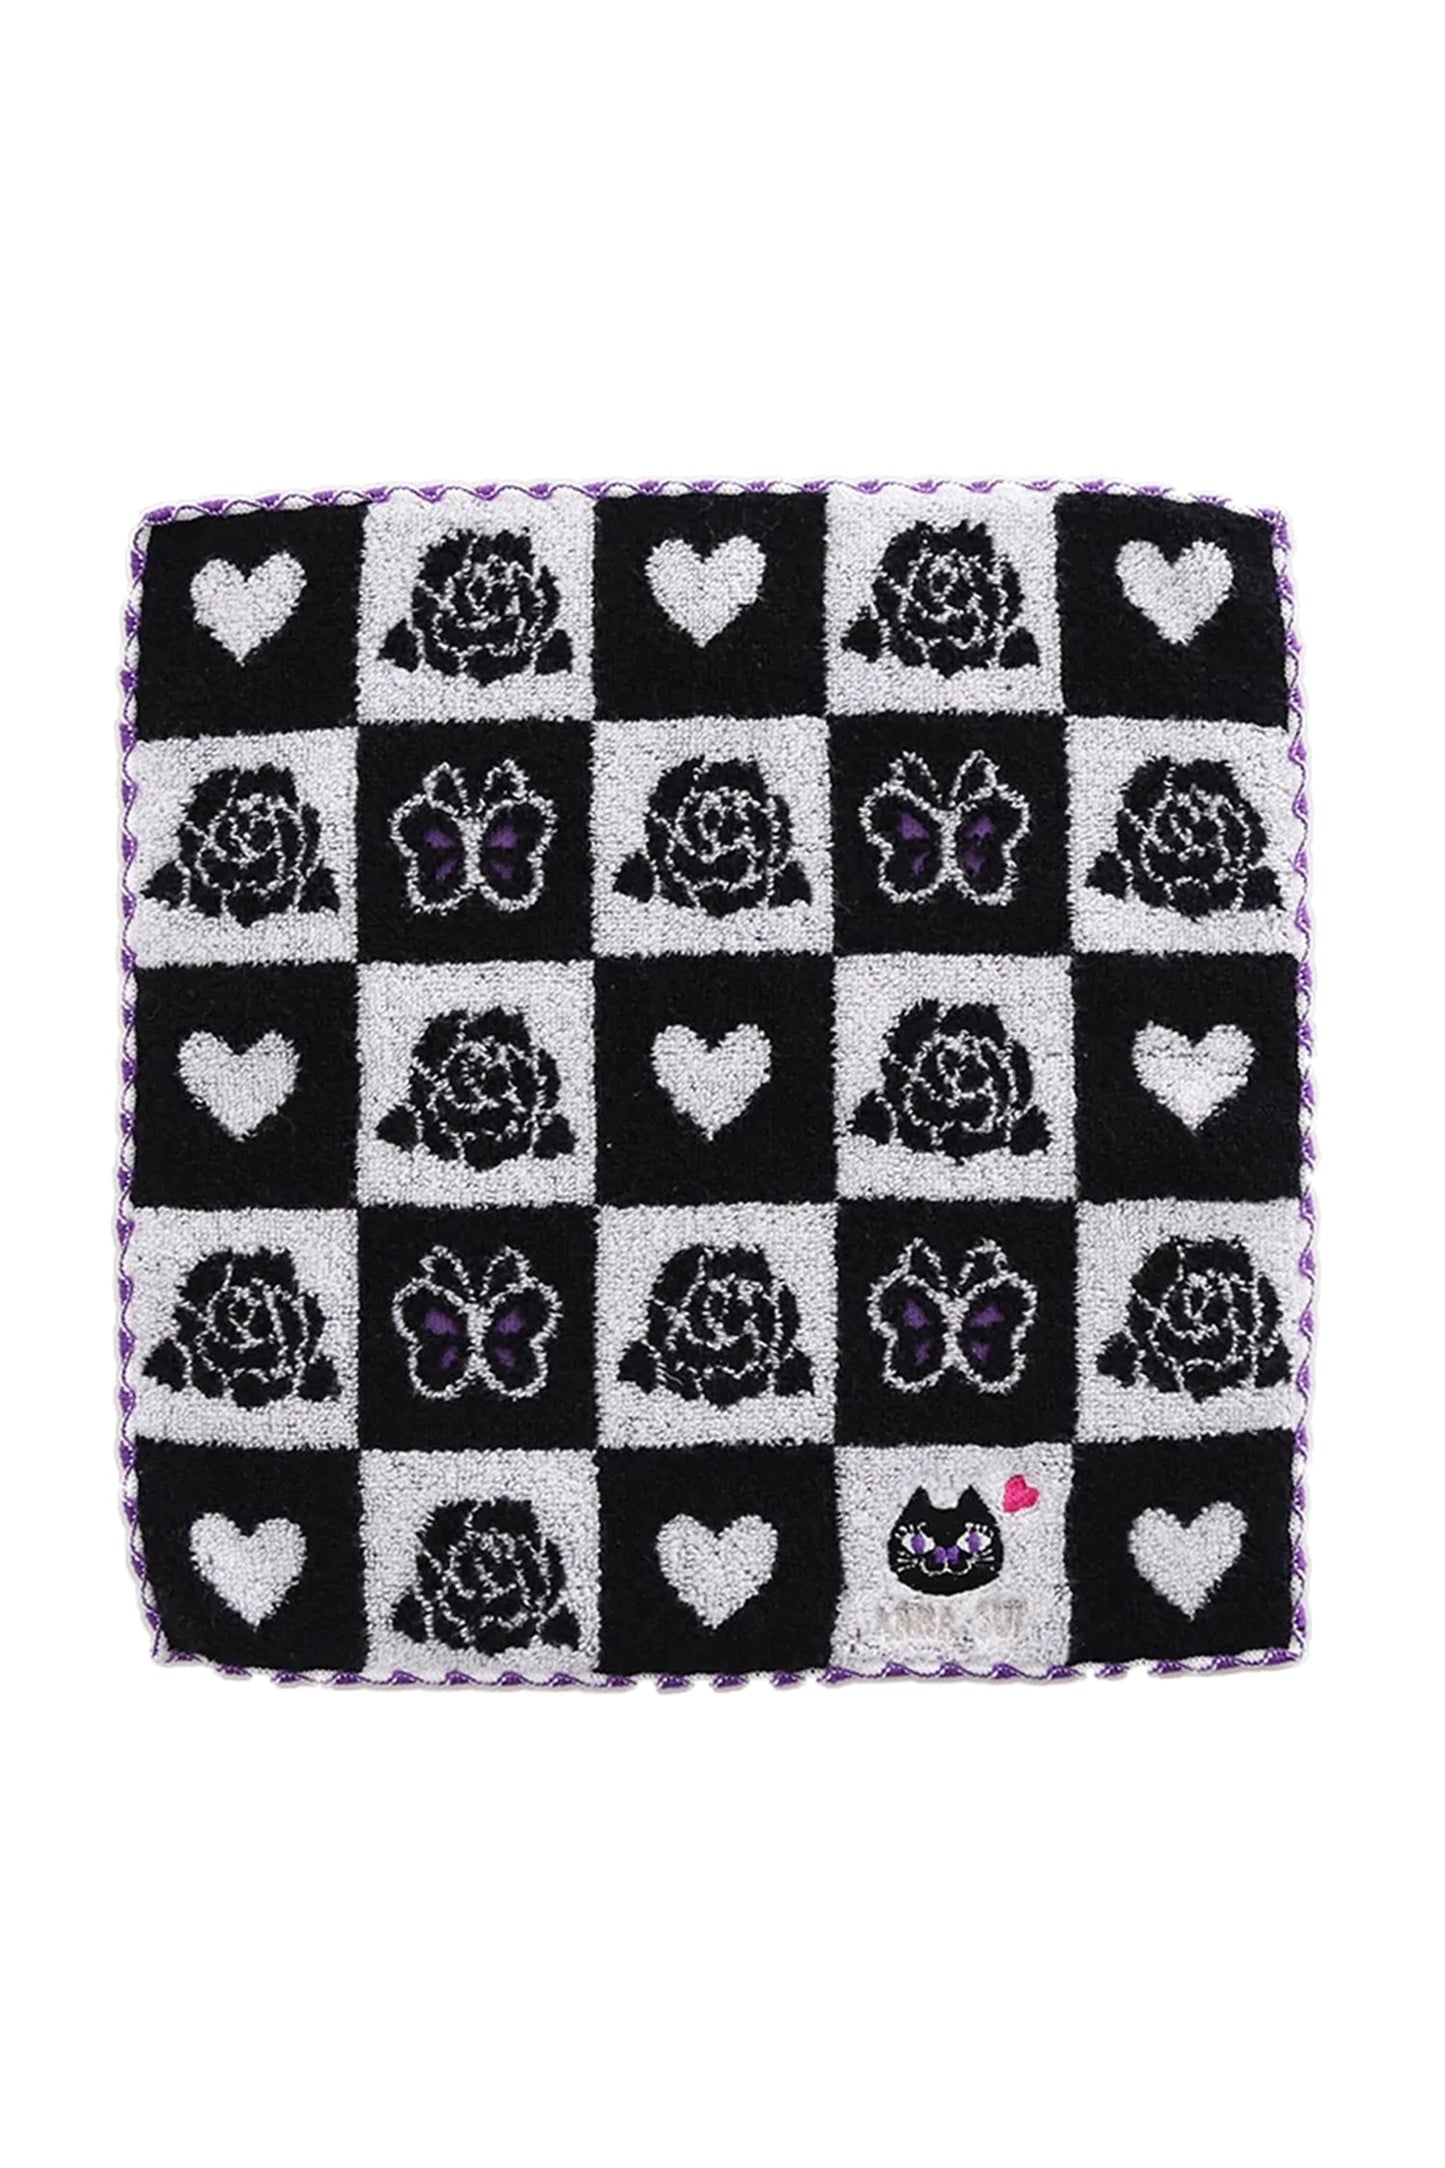 Washcloth, black/white checkerboard, white heart, black roses, black/purple butterflies, cat, Anna Sui